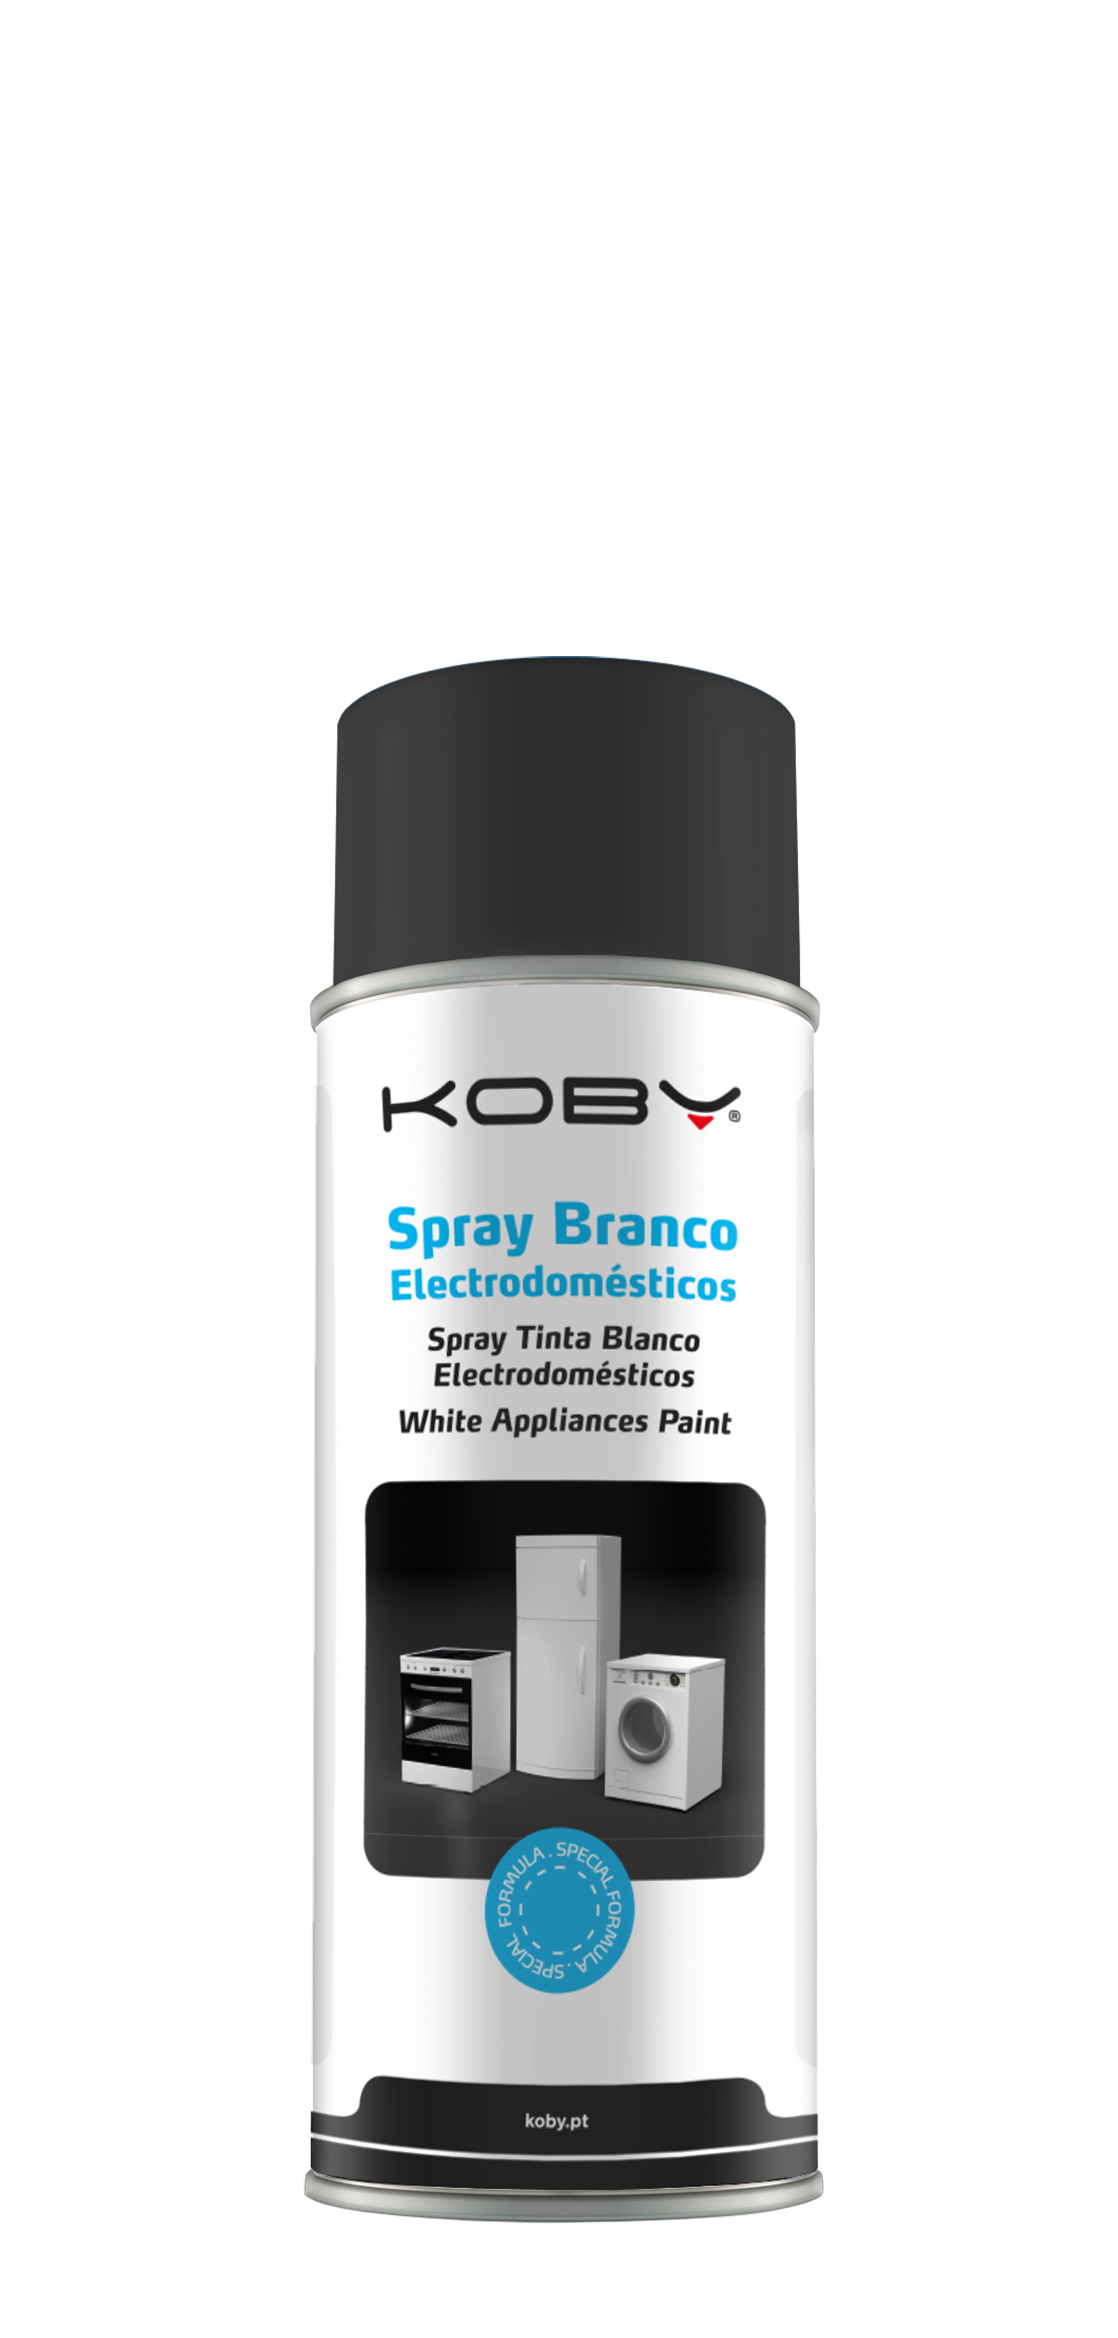 Spray Tinta Blanco Electrodomésticos